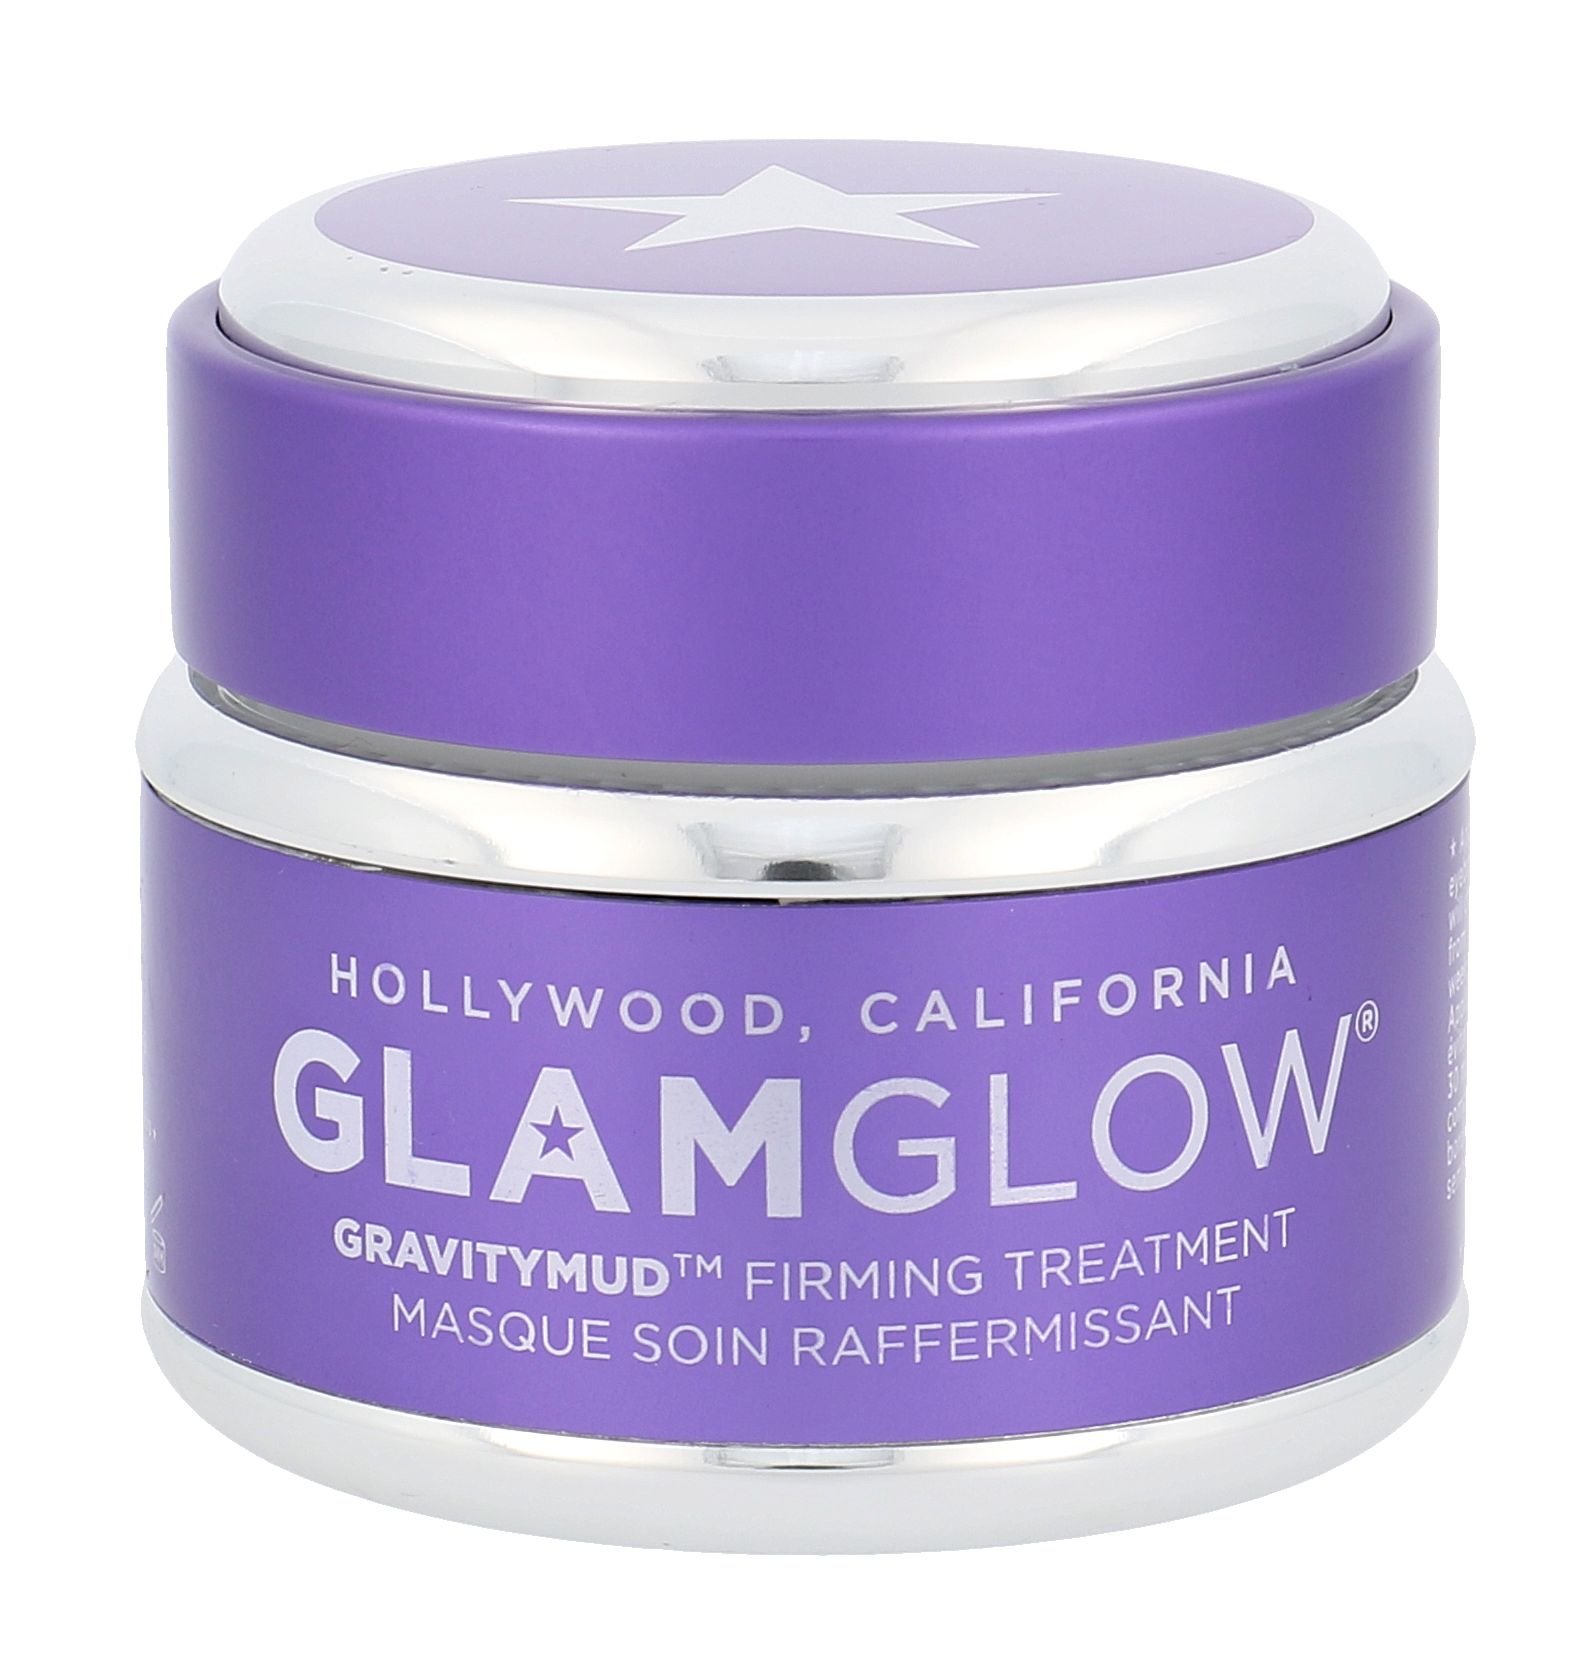 Glam Glow Gravitymud Firming Treatment